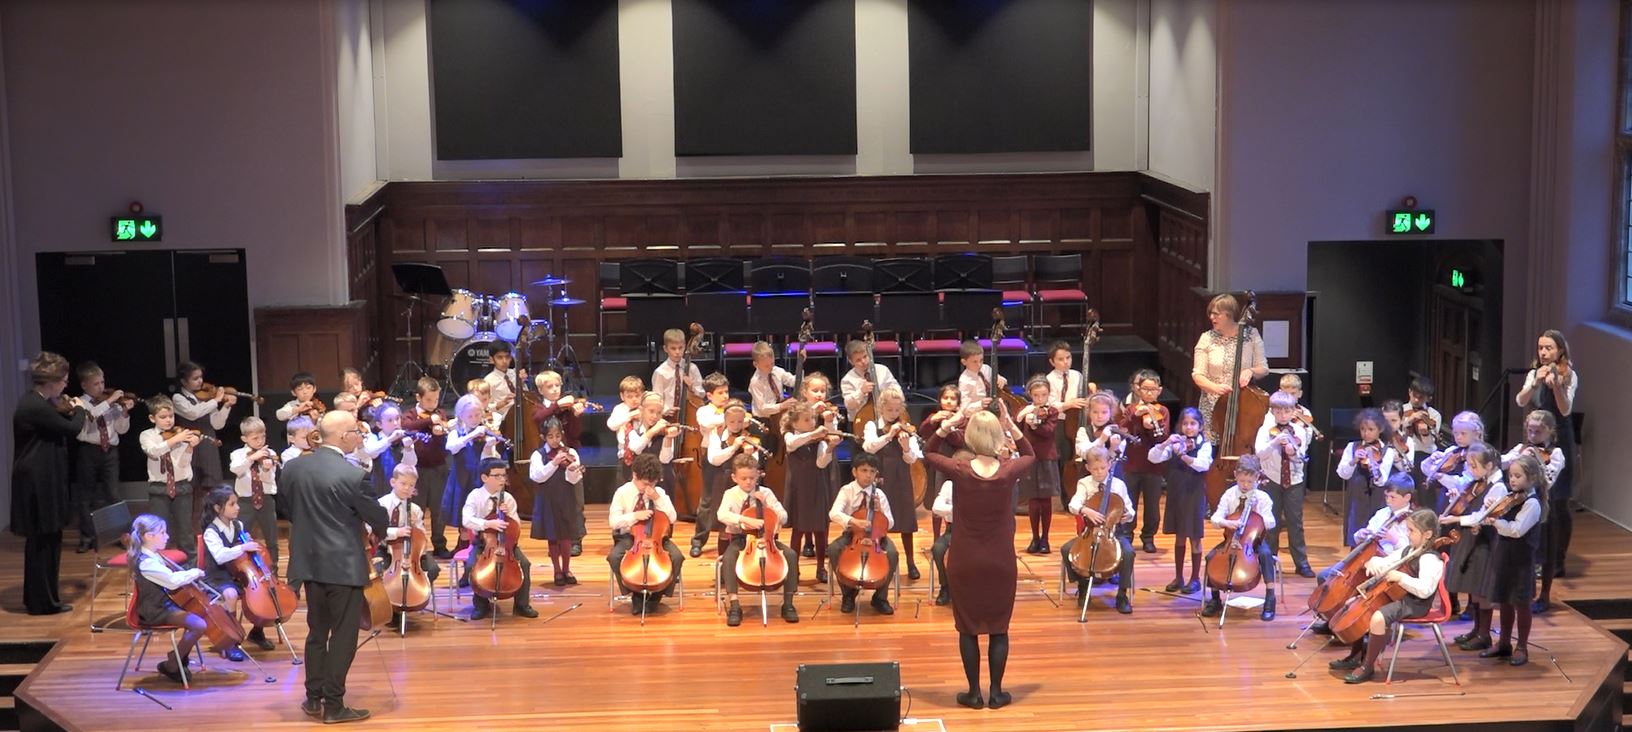 Year 3 Strings Concert, 8th November 2018